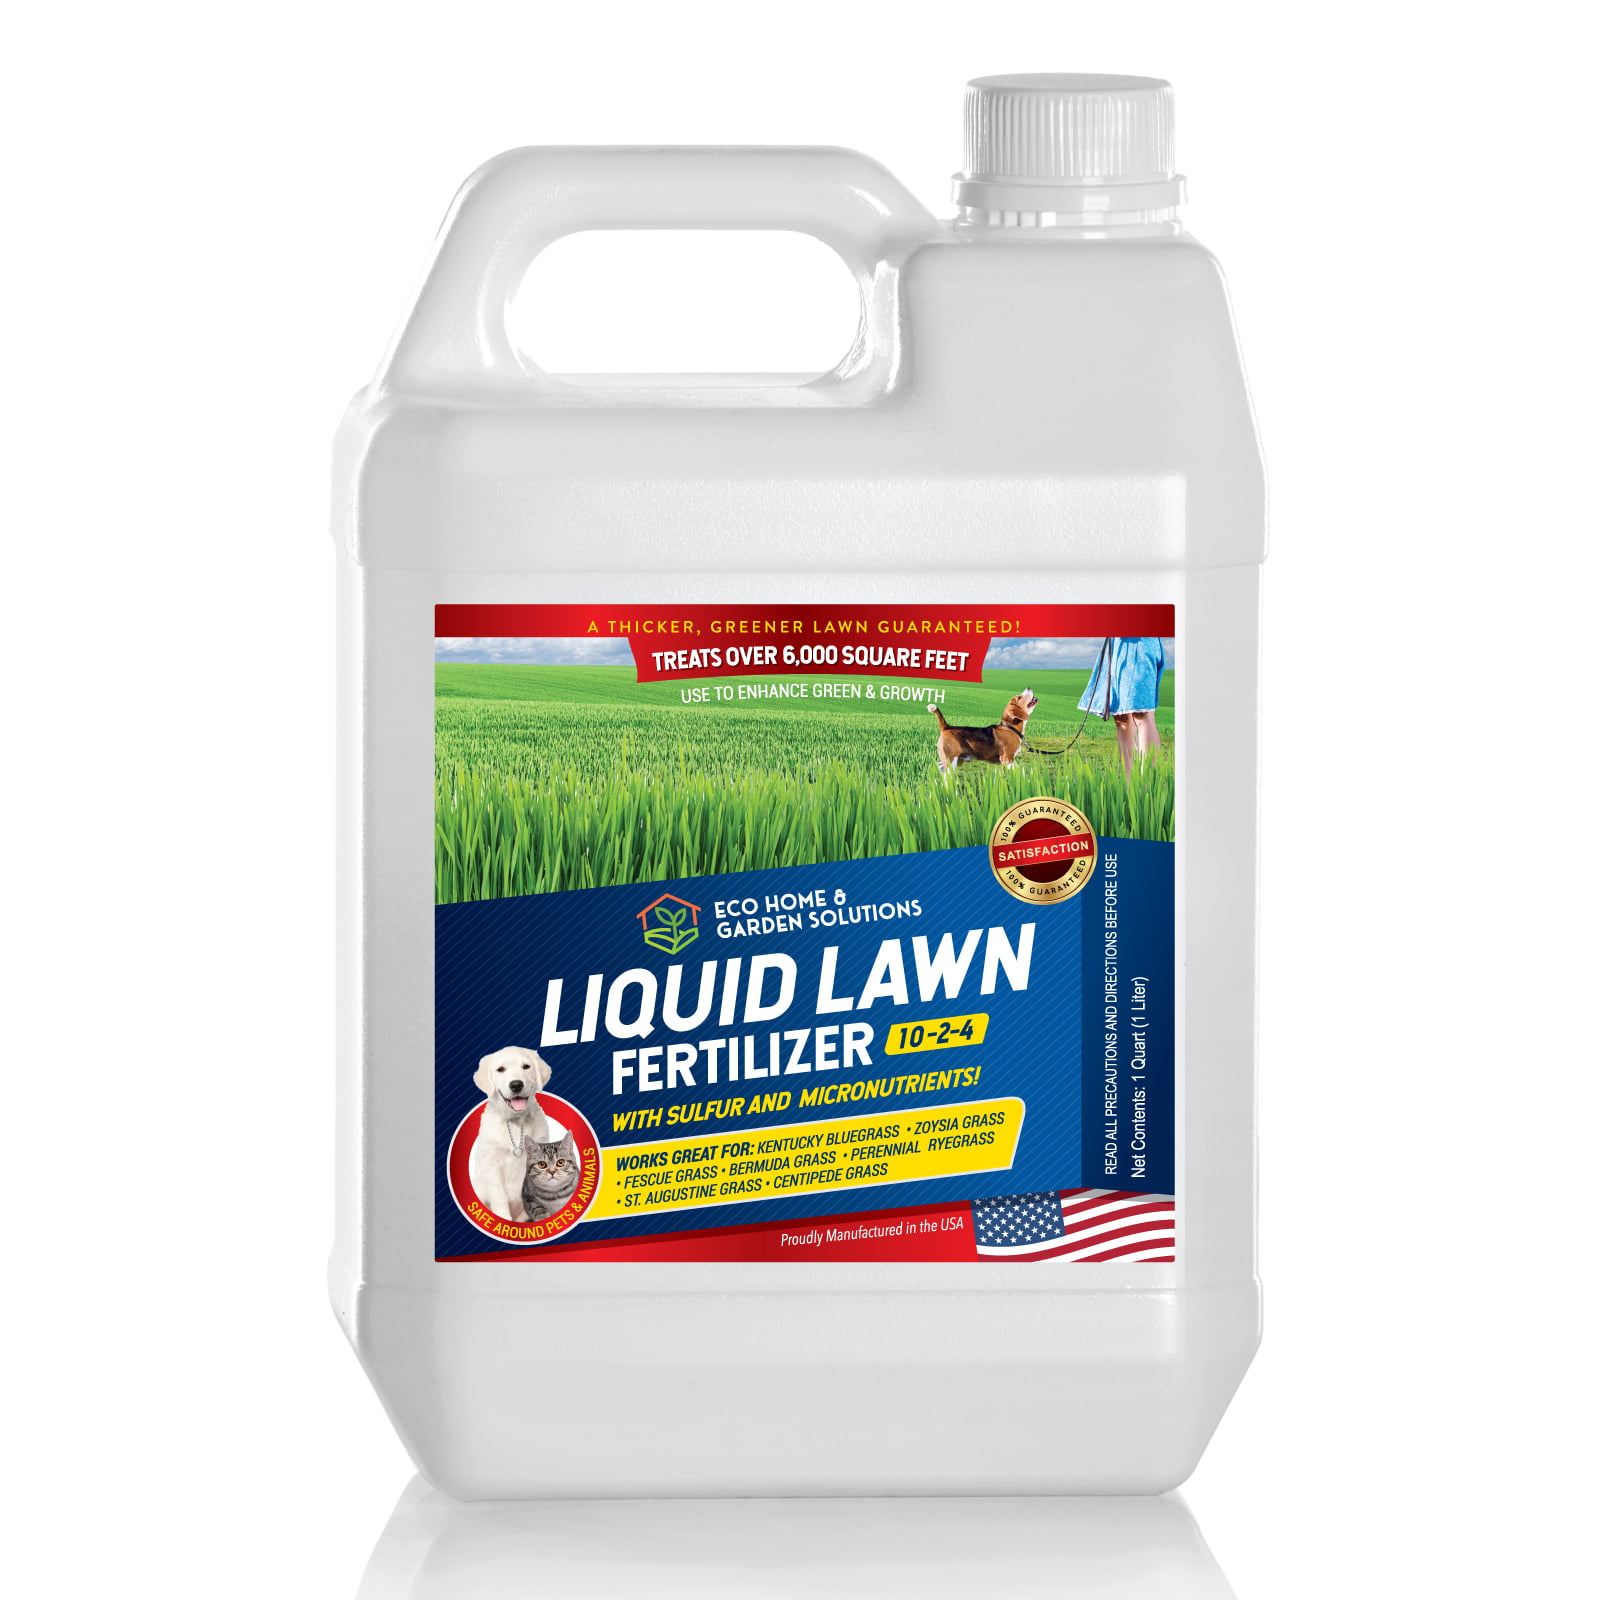 Liquid Lawn Fertilizer - Eco Garden Solutions 10-2-4 NPK Fertilizer